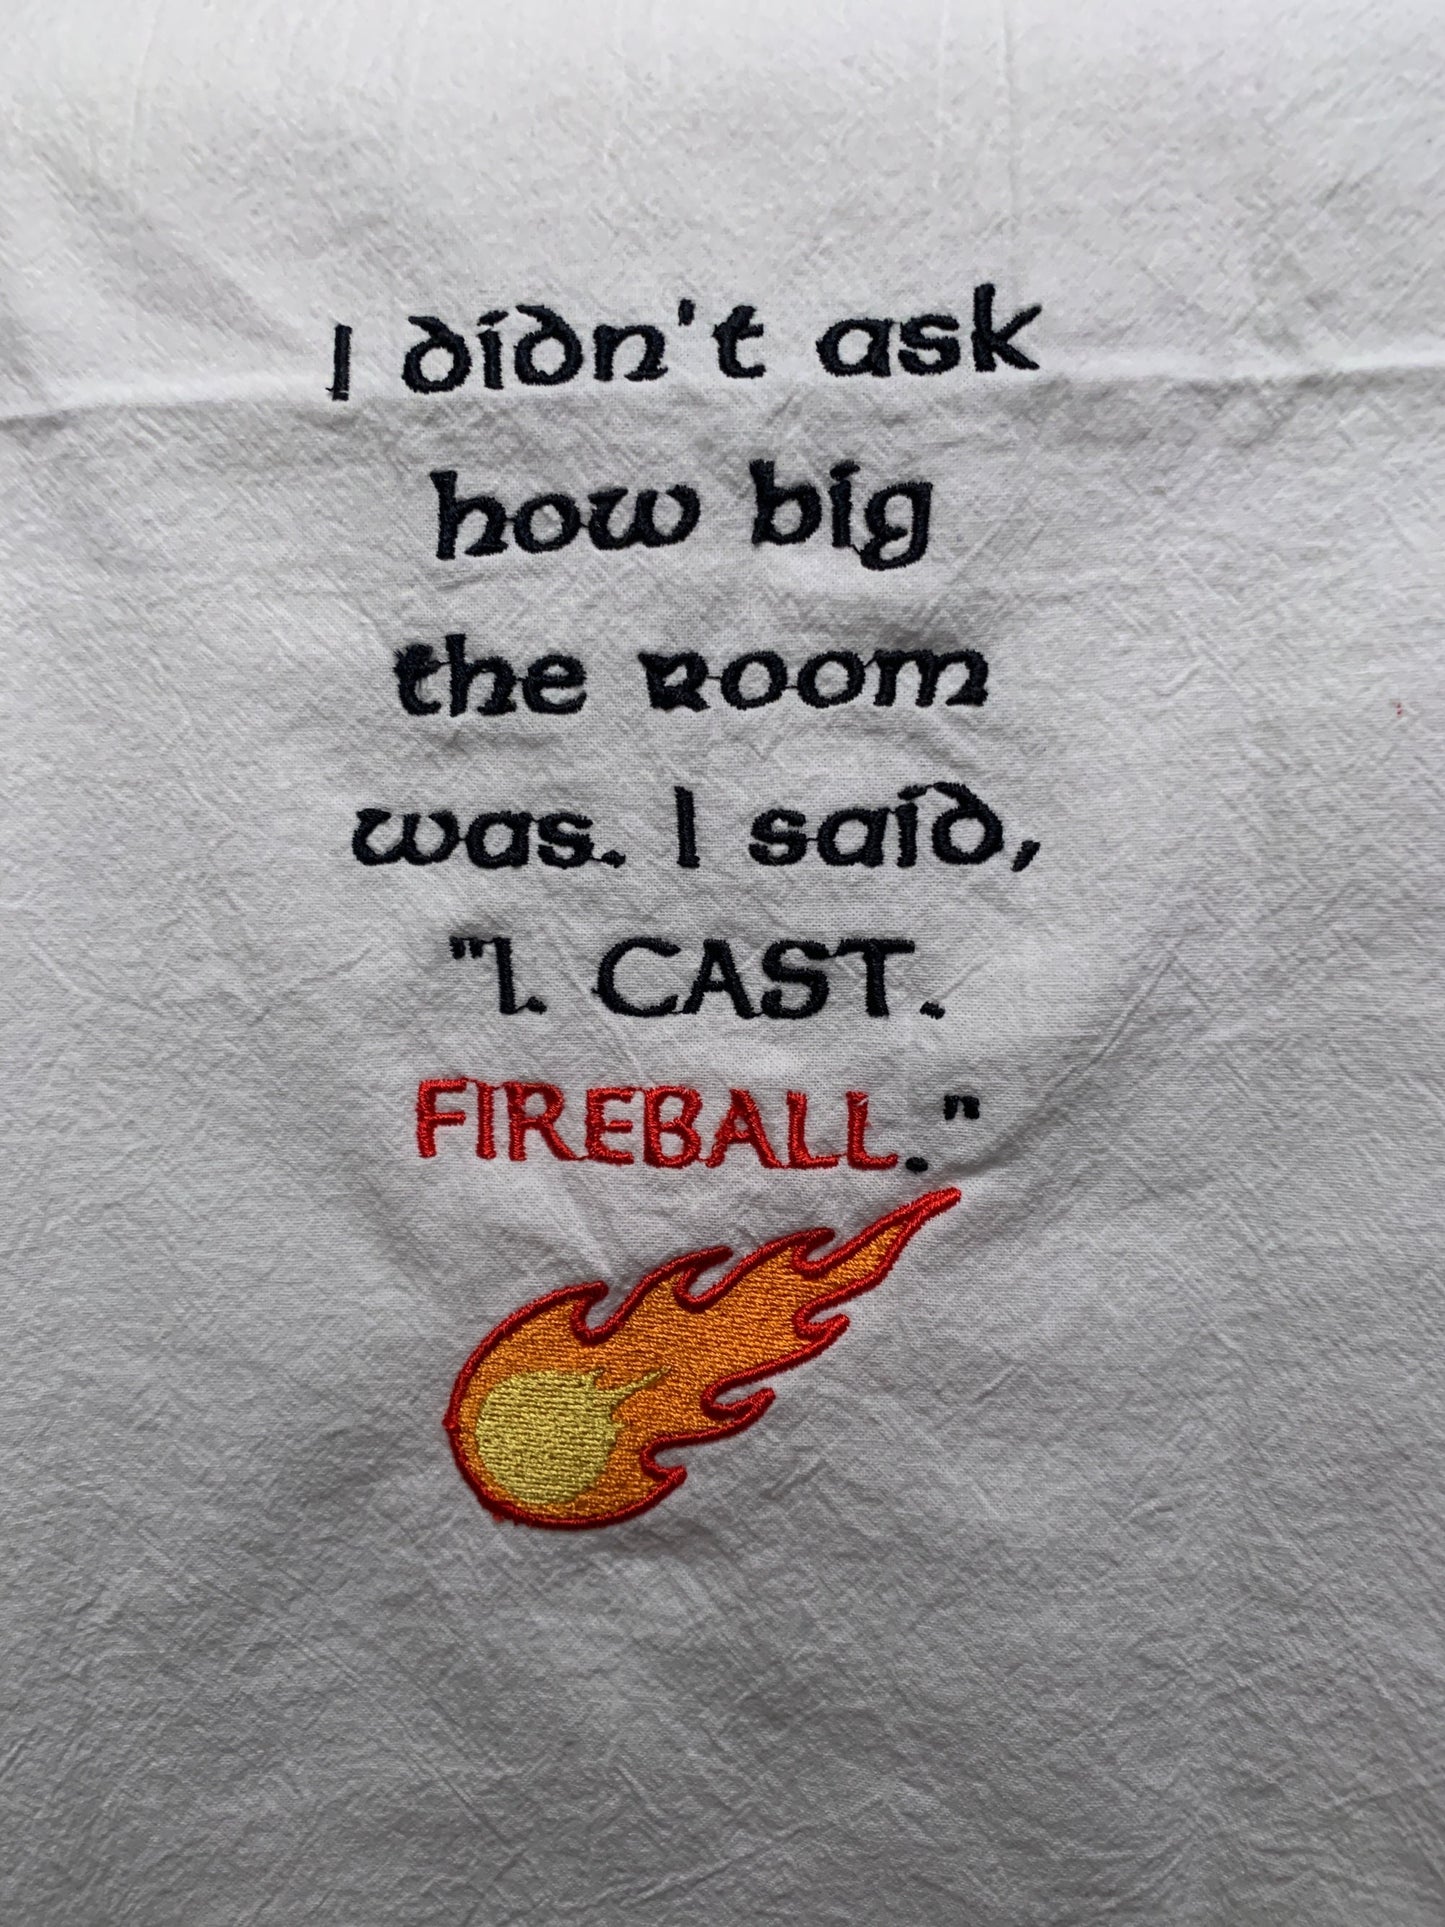 Embroidered Tea Towel "I Cast Fireball"